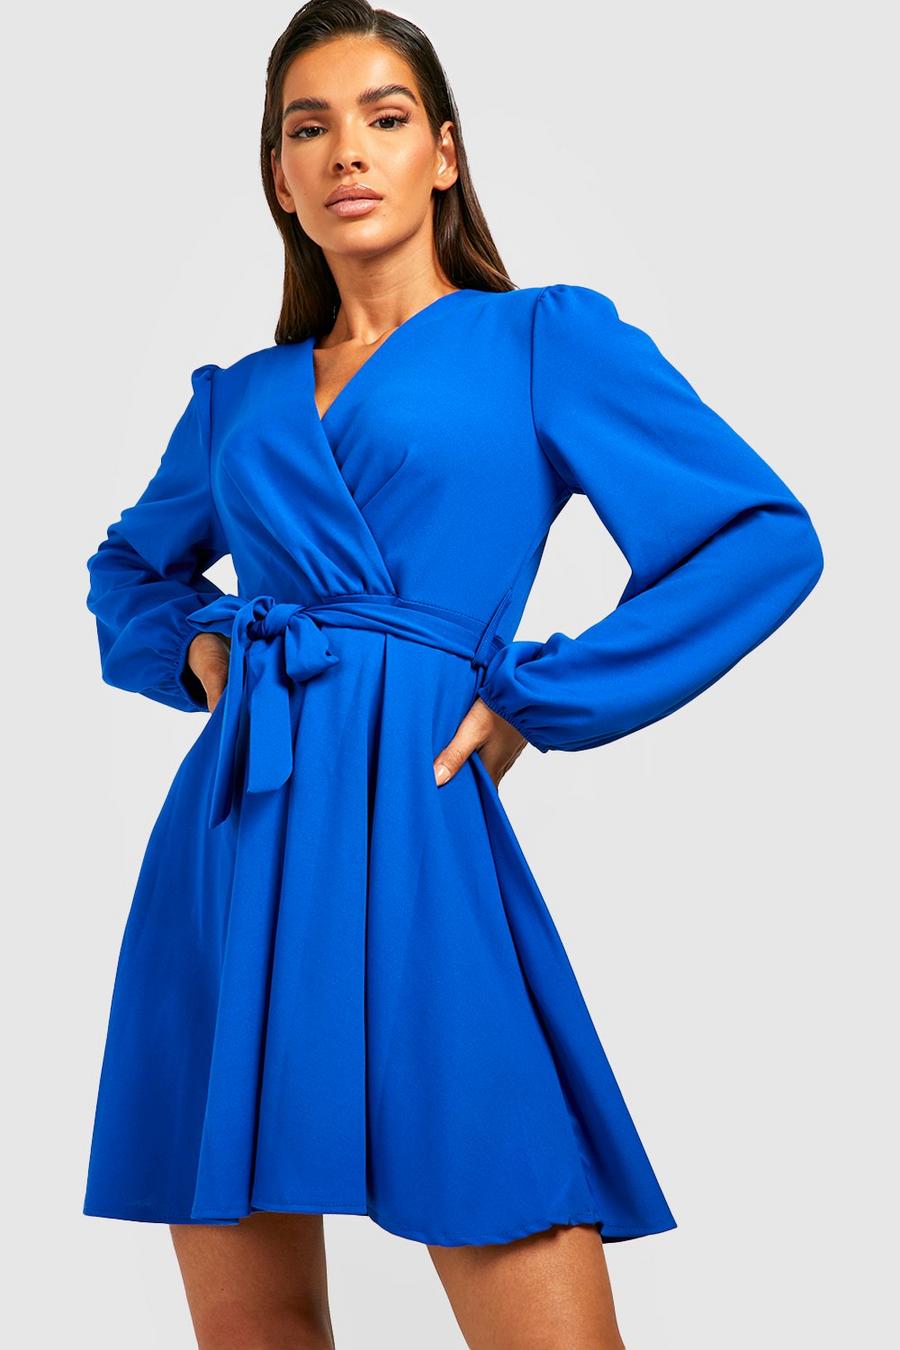 Cobalt שמלת סקייטר מידי בסגנון מעטפת עם שרוולים תפוחים